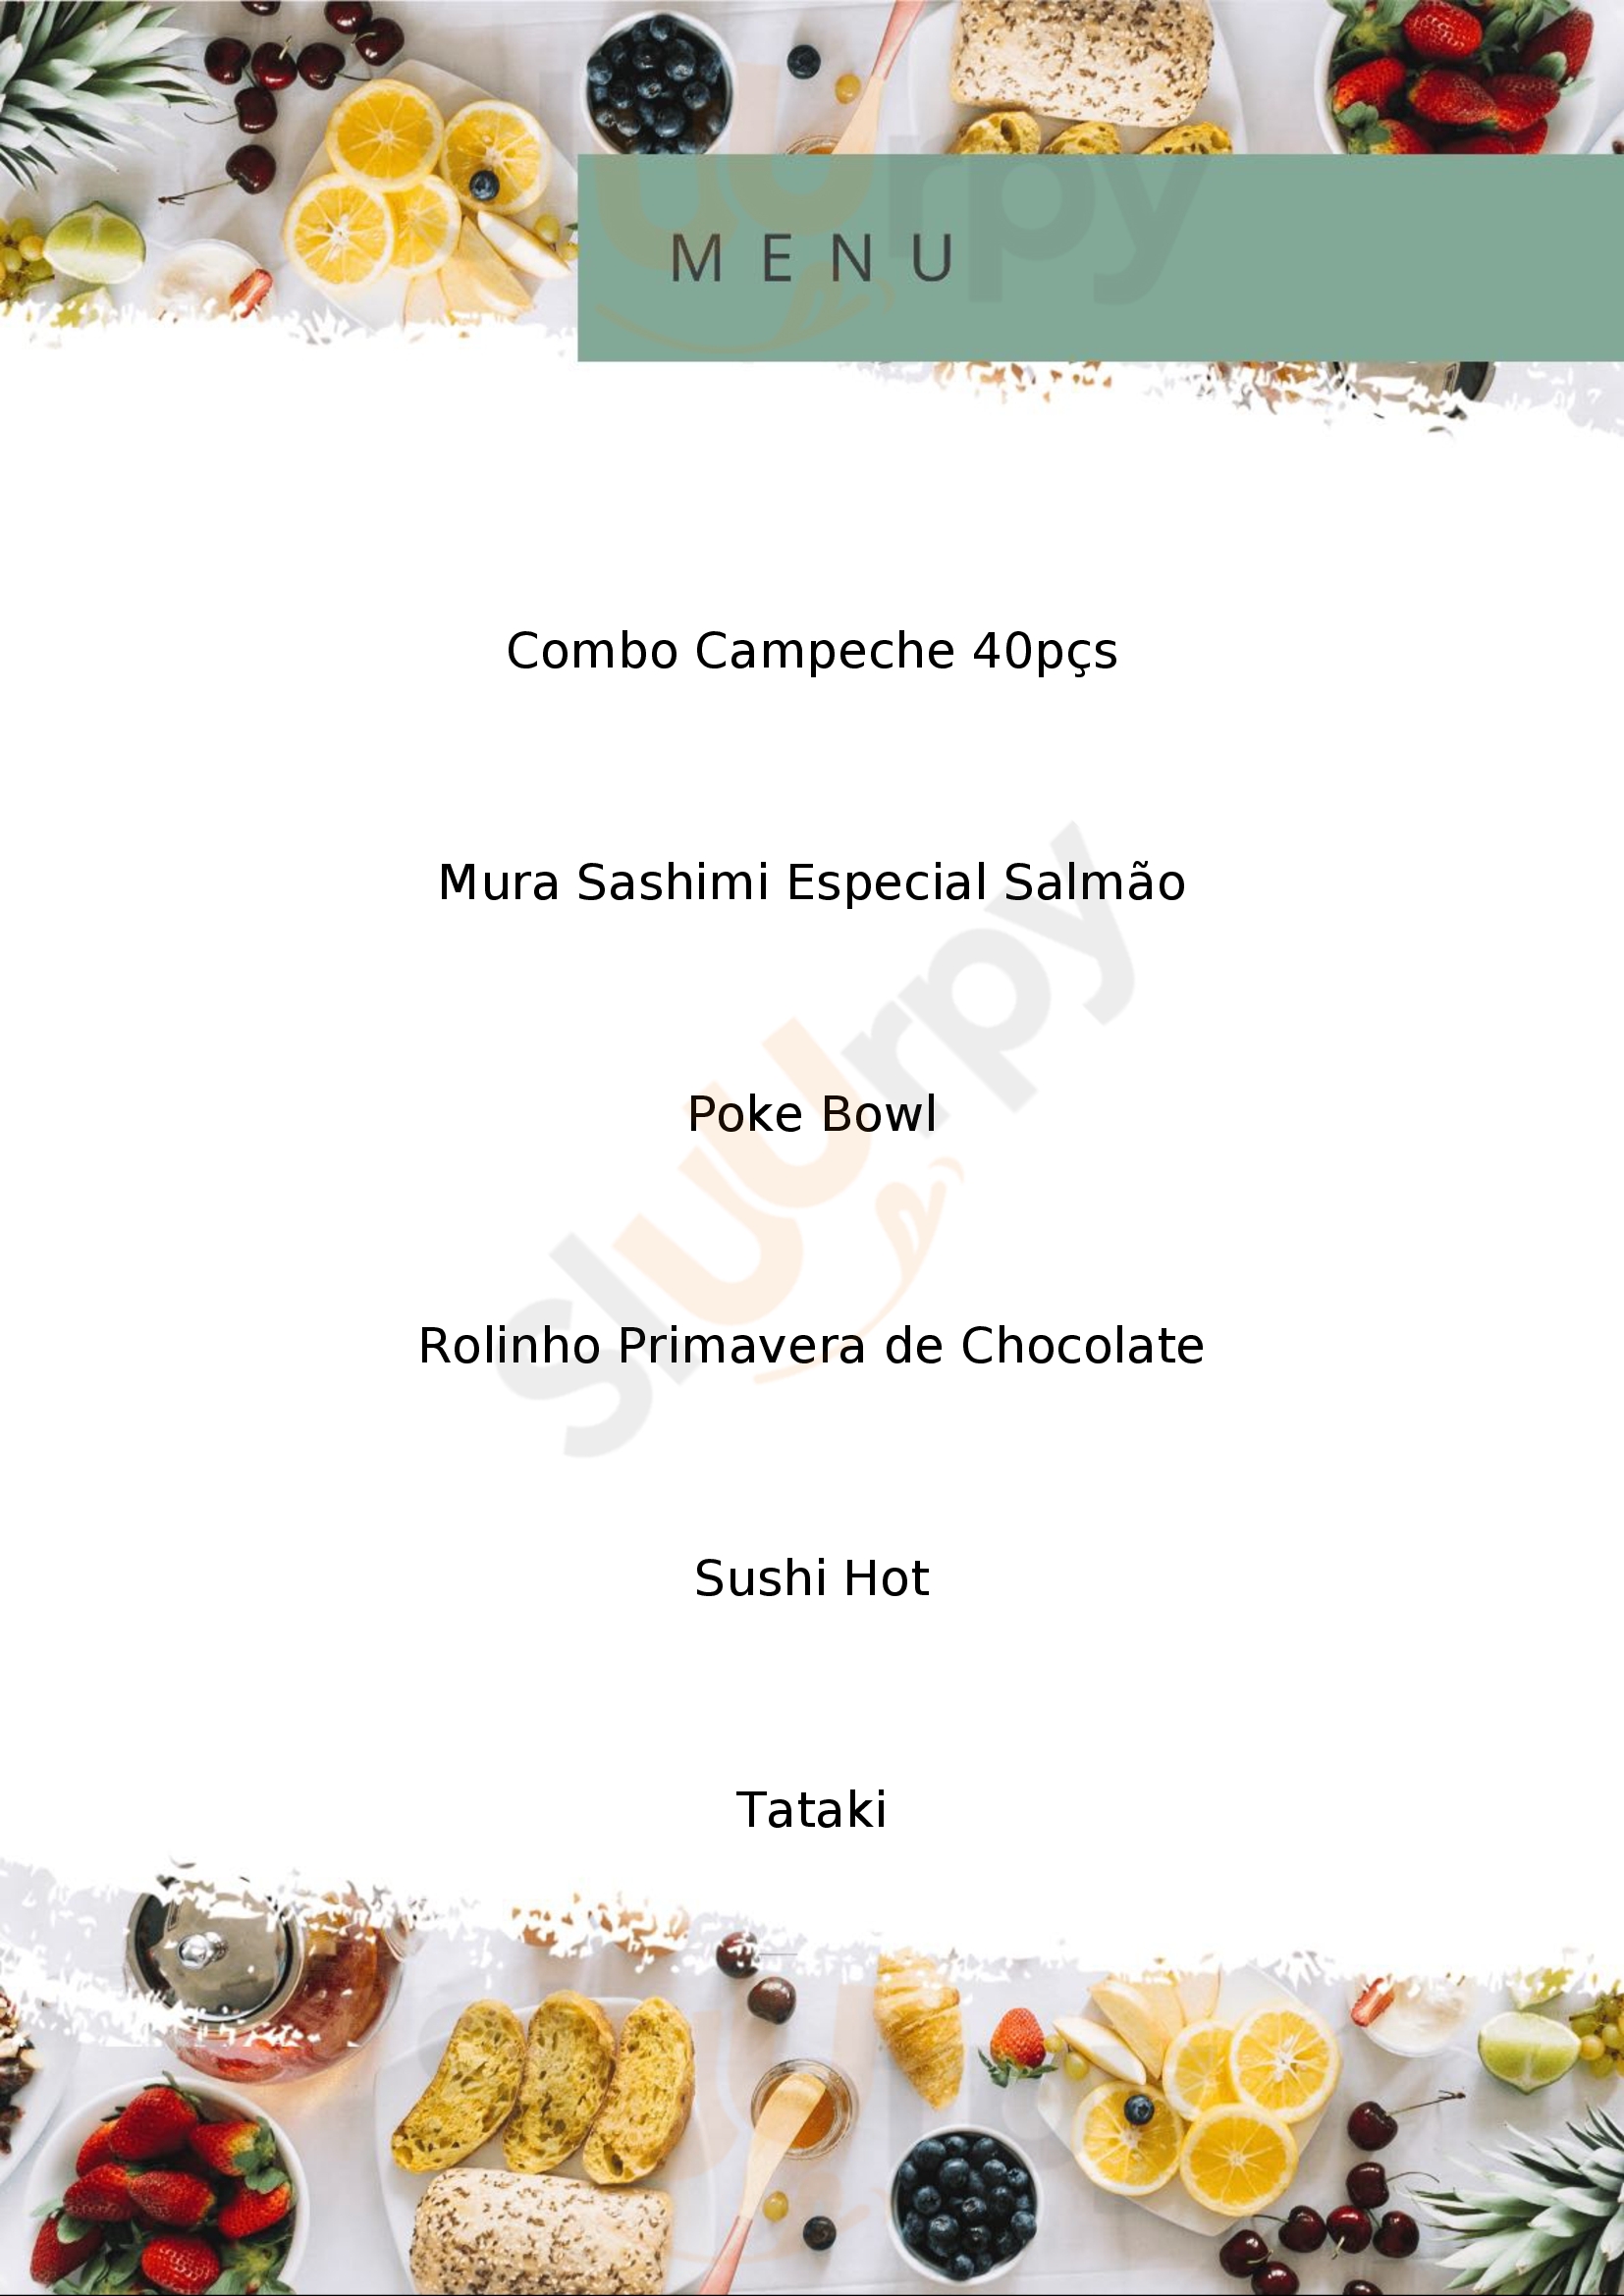 Muramaki Culinária Japonesa Florianópolis Menu - 1